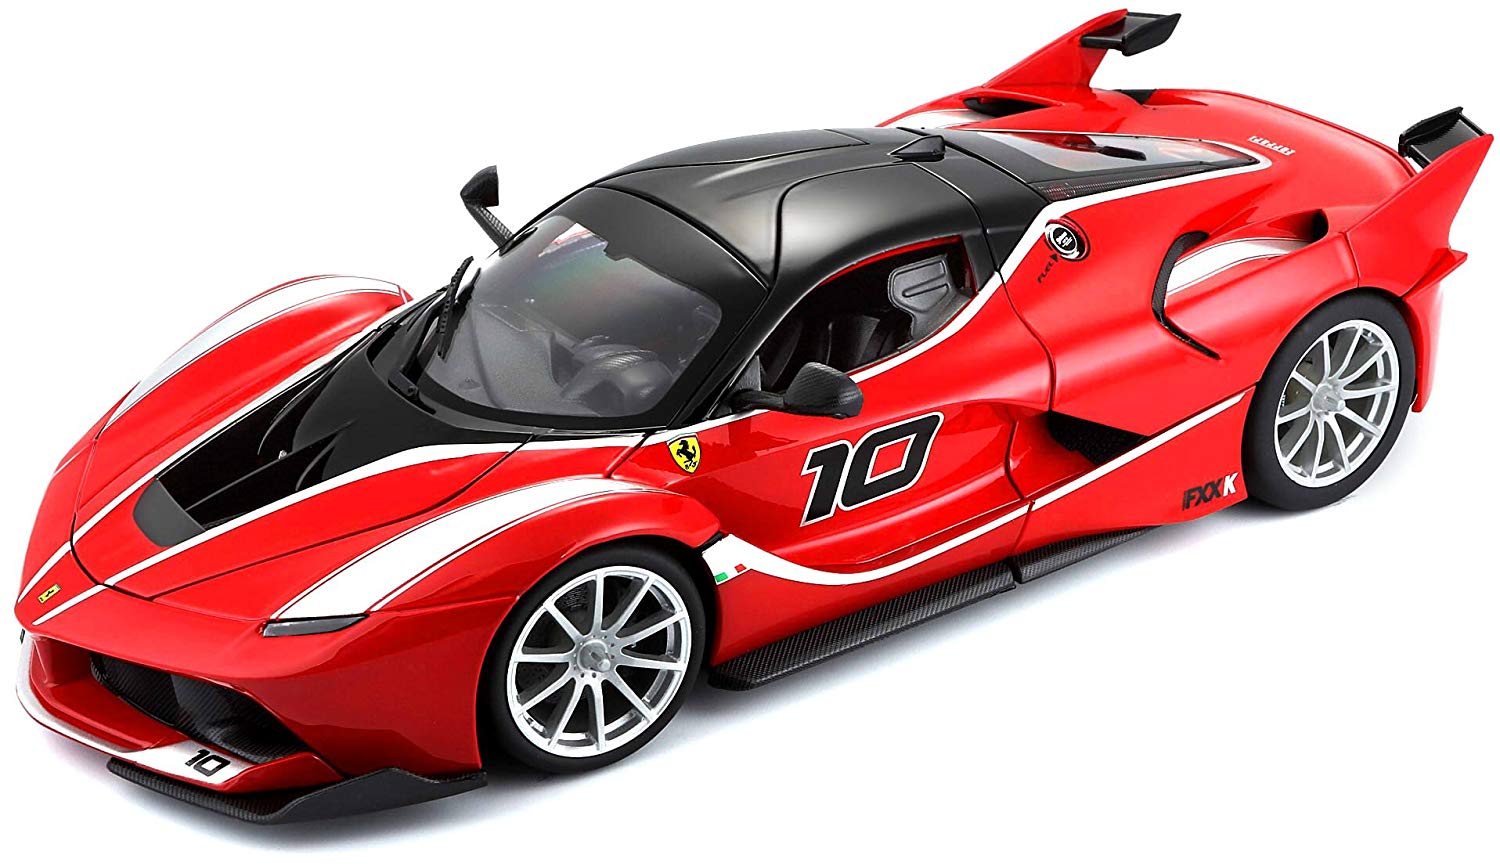 Bburago 1: 18 Scale Ferrari Fxx, Red 15616010R